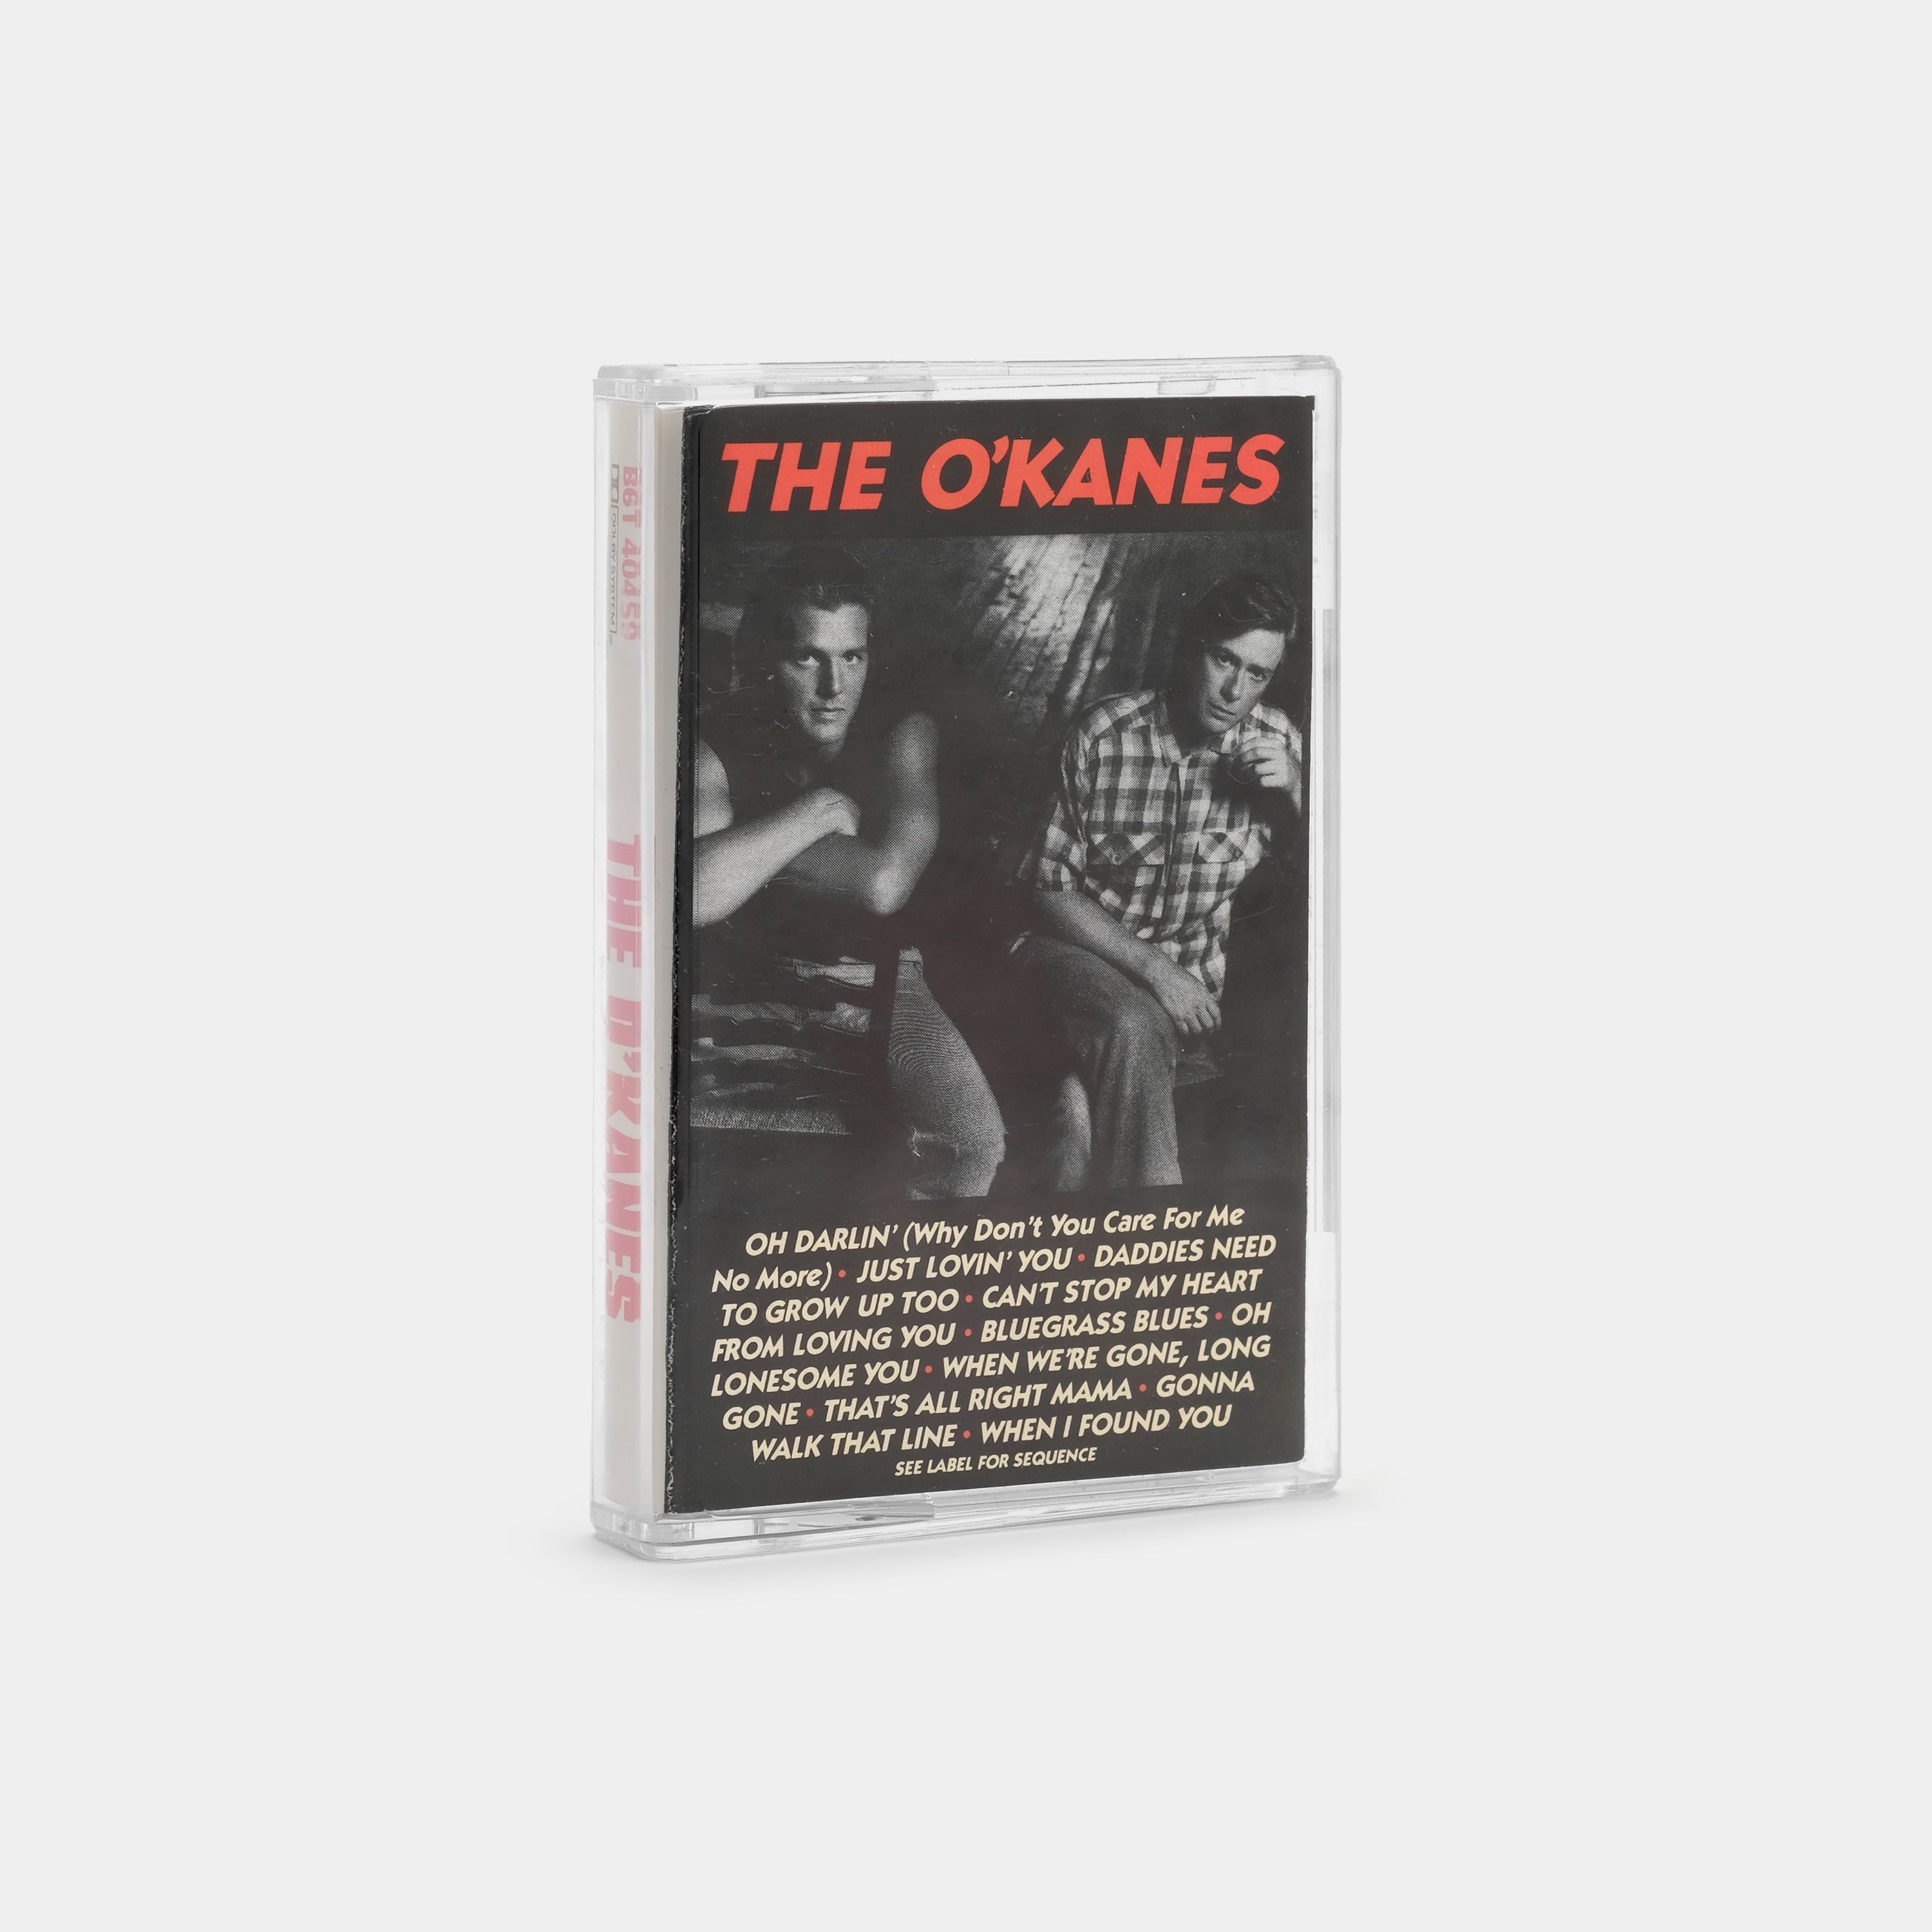 The O'Kanes - The O'Kanes Cassette Tape